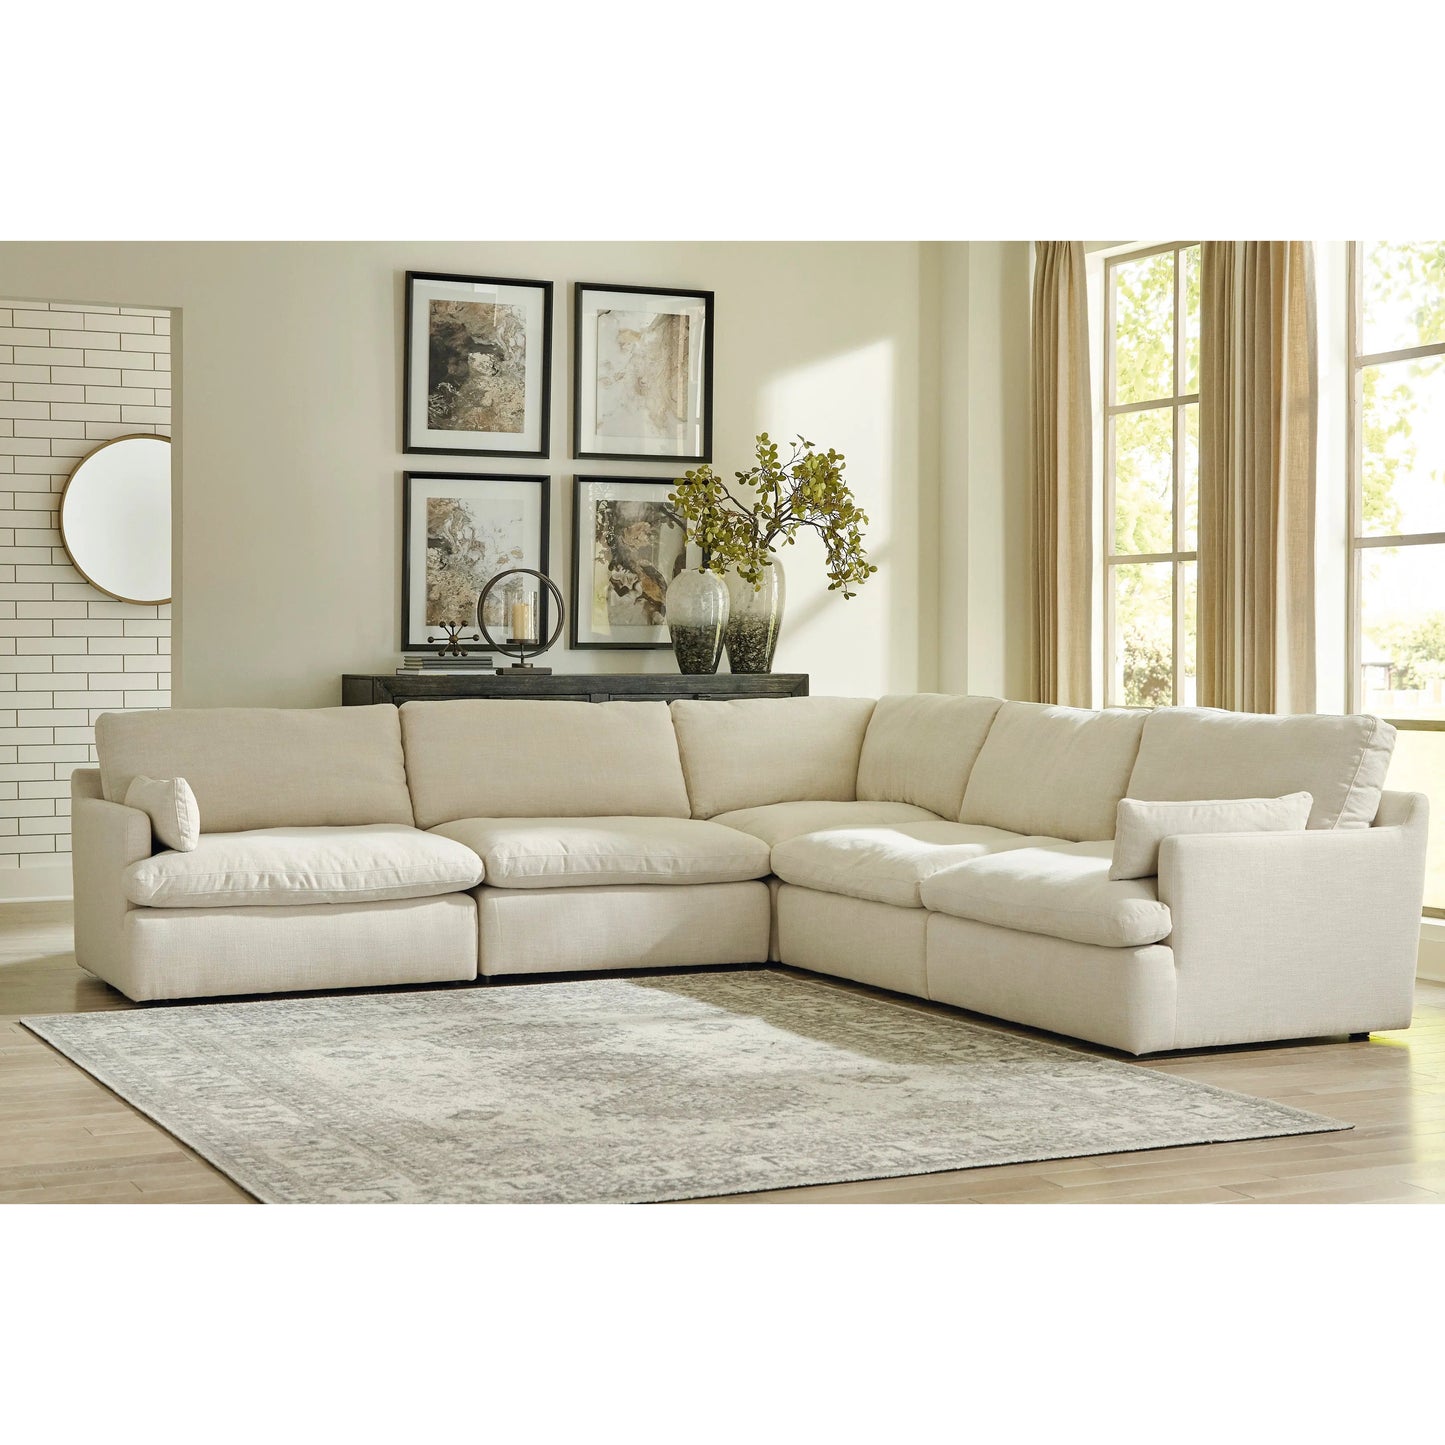 Tanavi - Corner Lounge Ashley Furniture HomeStore